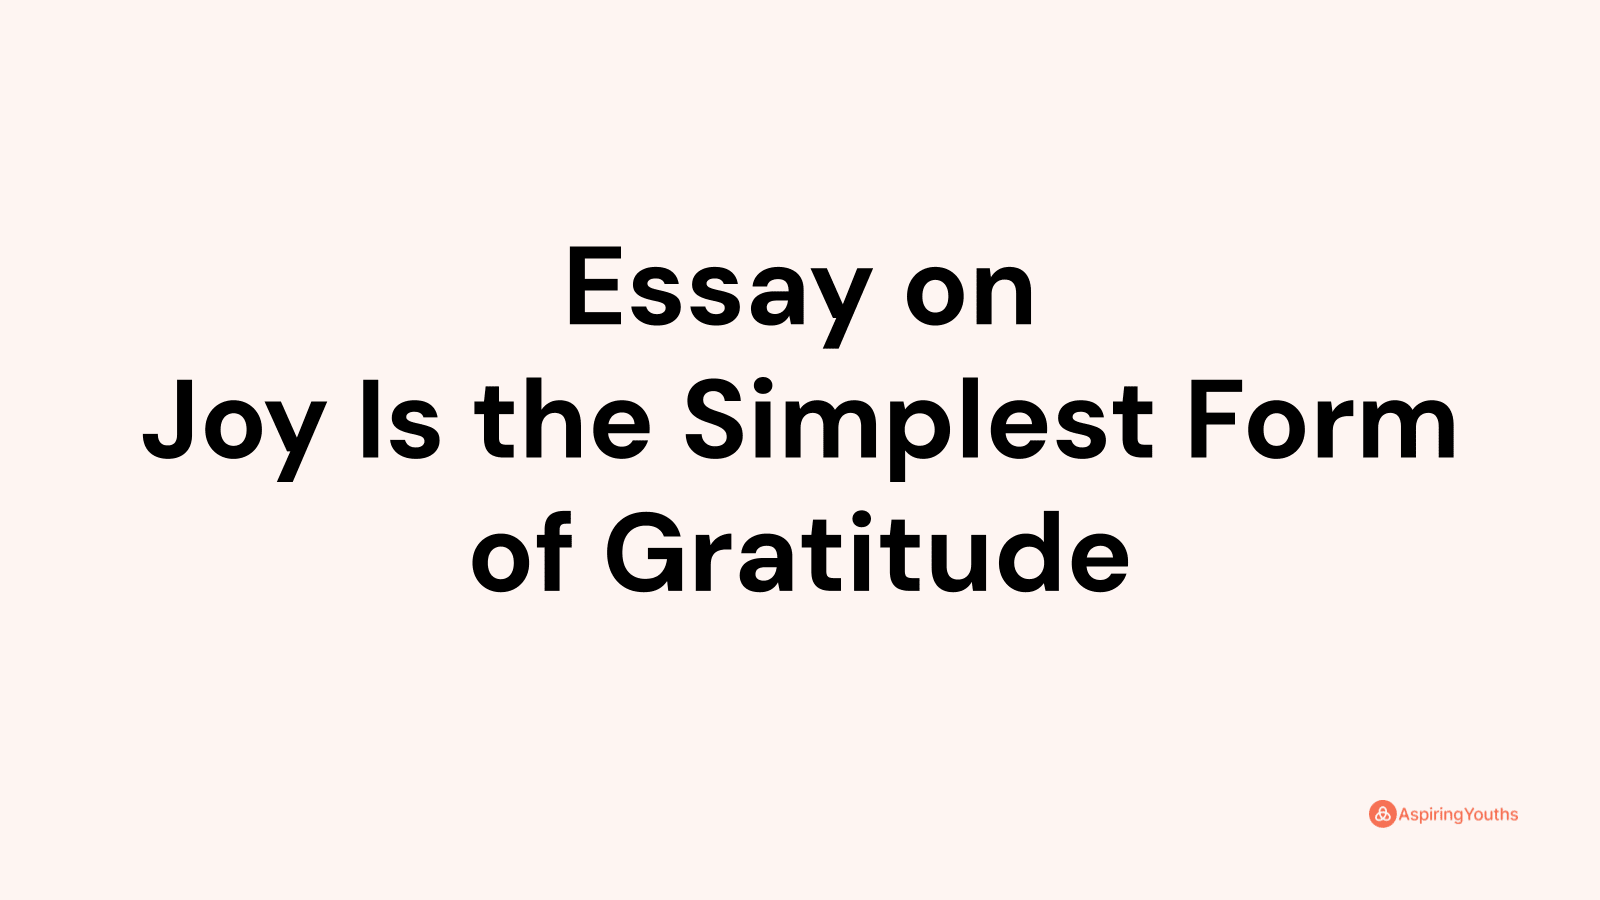 joy is the simplest form of gratitude essay upsc